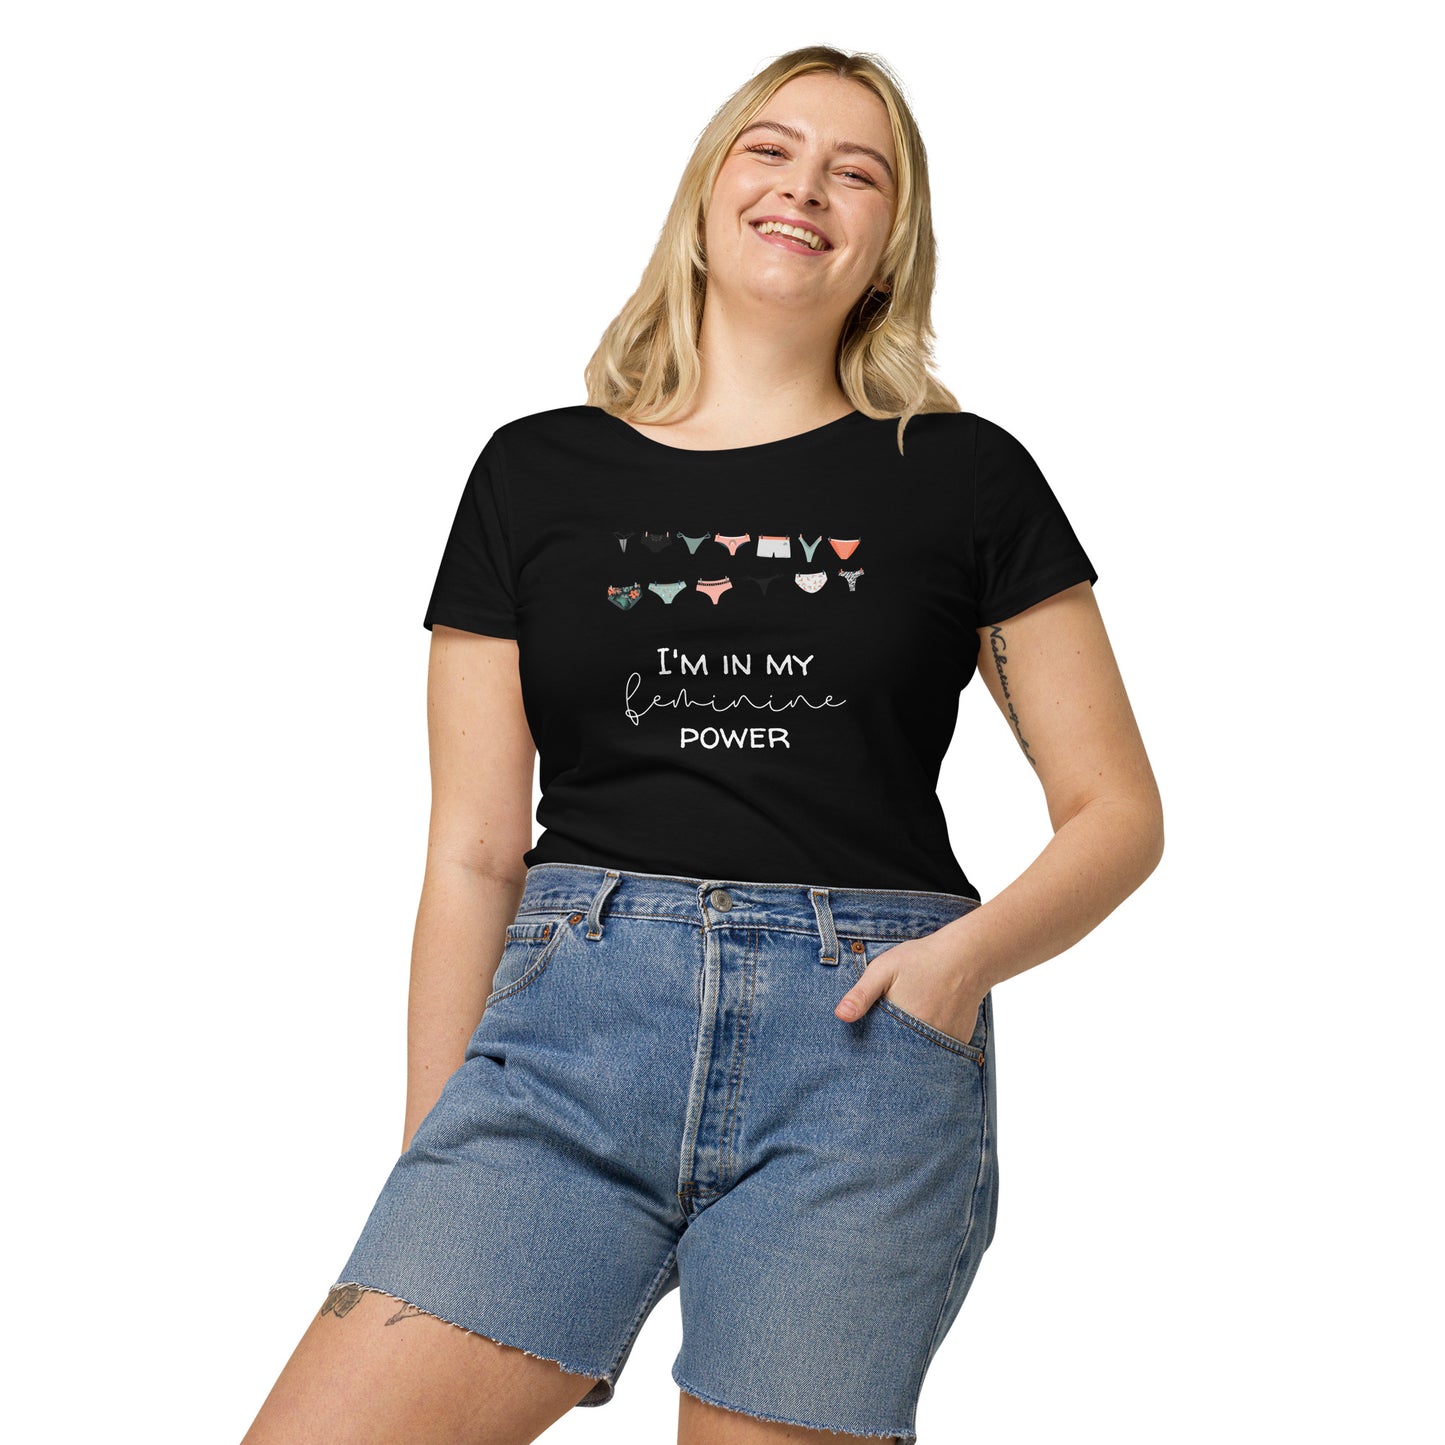 Feminine power, t-shirt